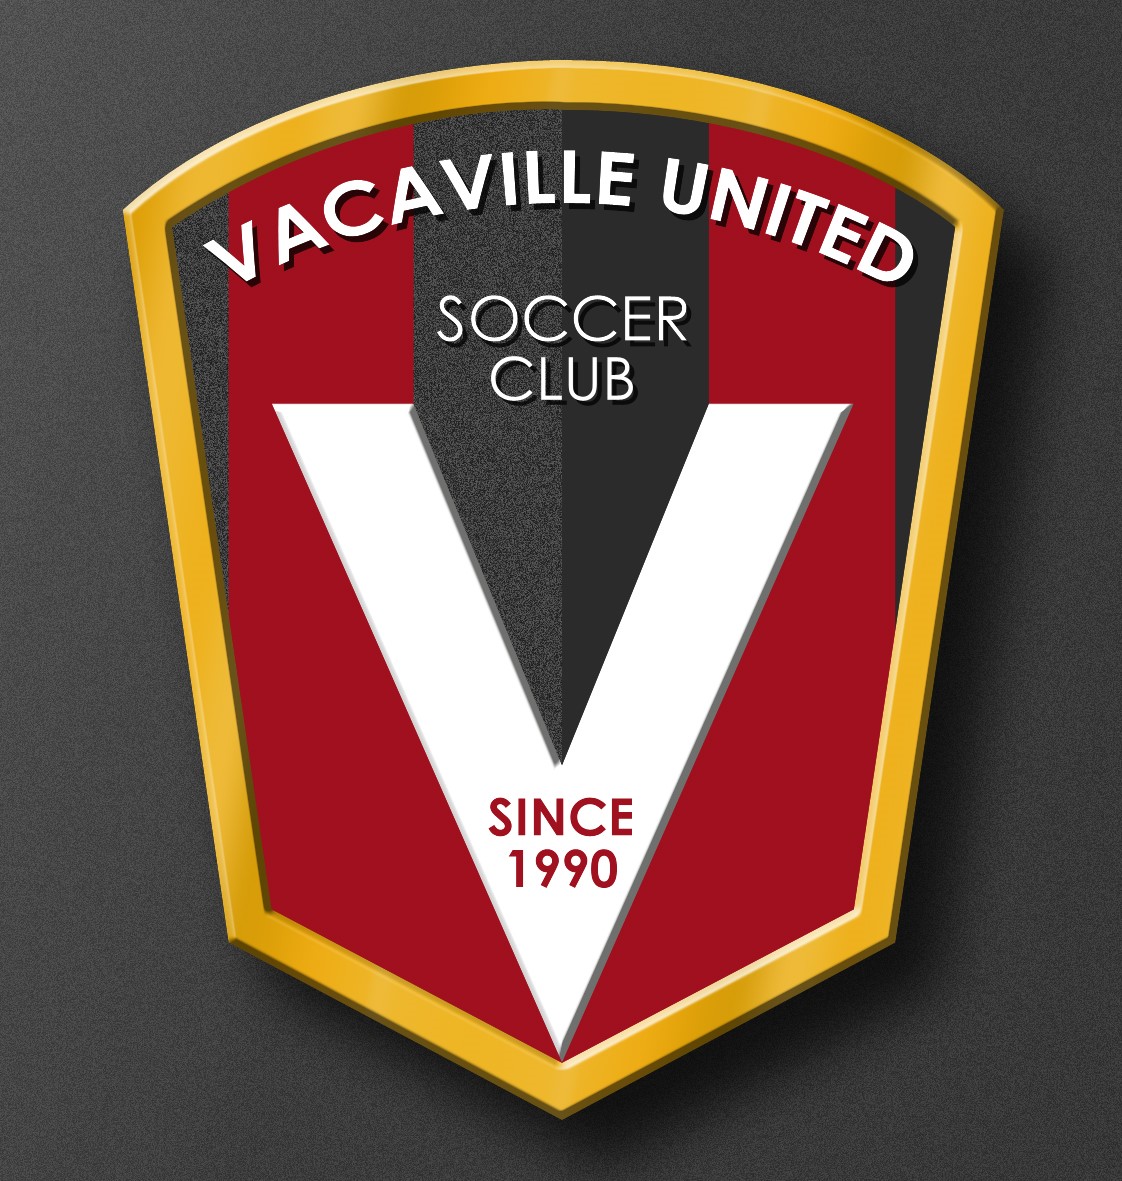 VACAVILLE UNITED SOCCER CLUB team badge